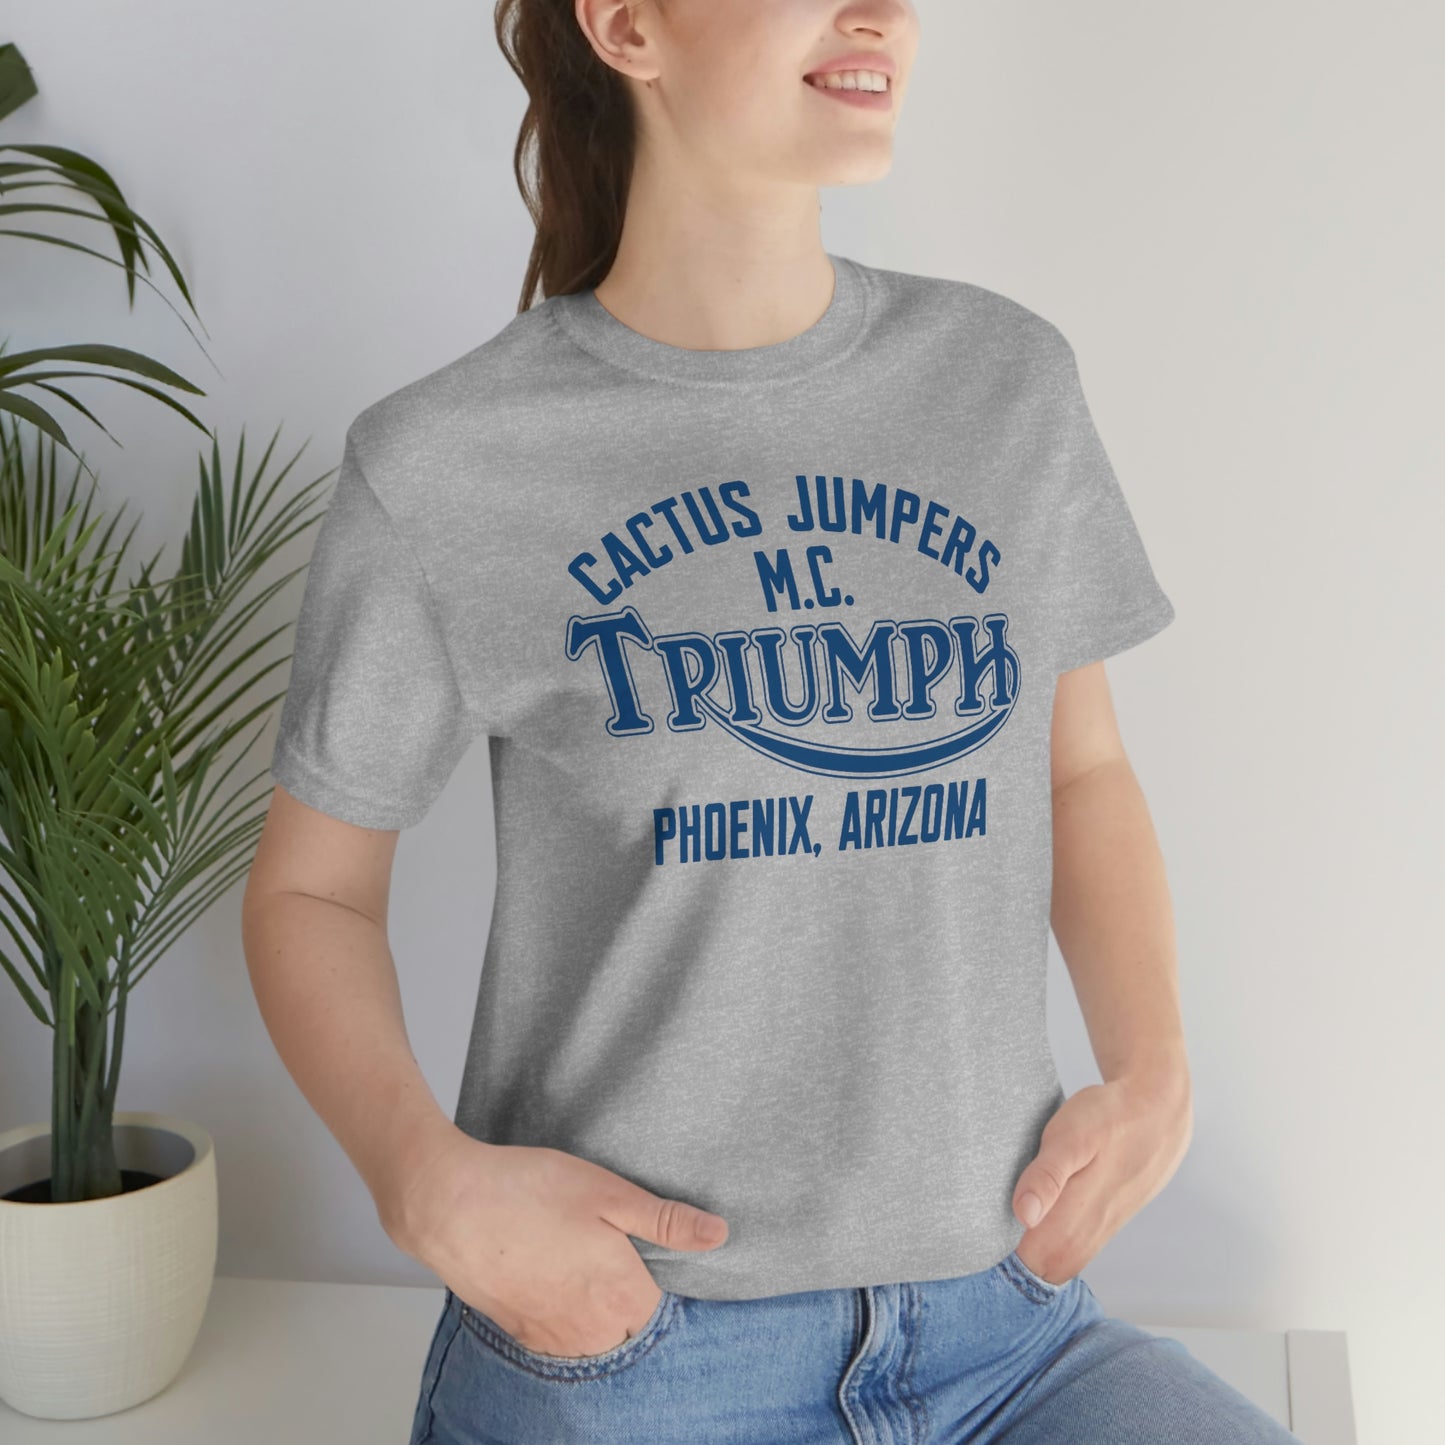 Cactus Jumpers Triumph Unisex Jersey Short Sleeve Tee